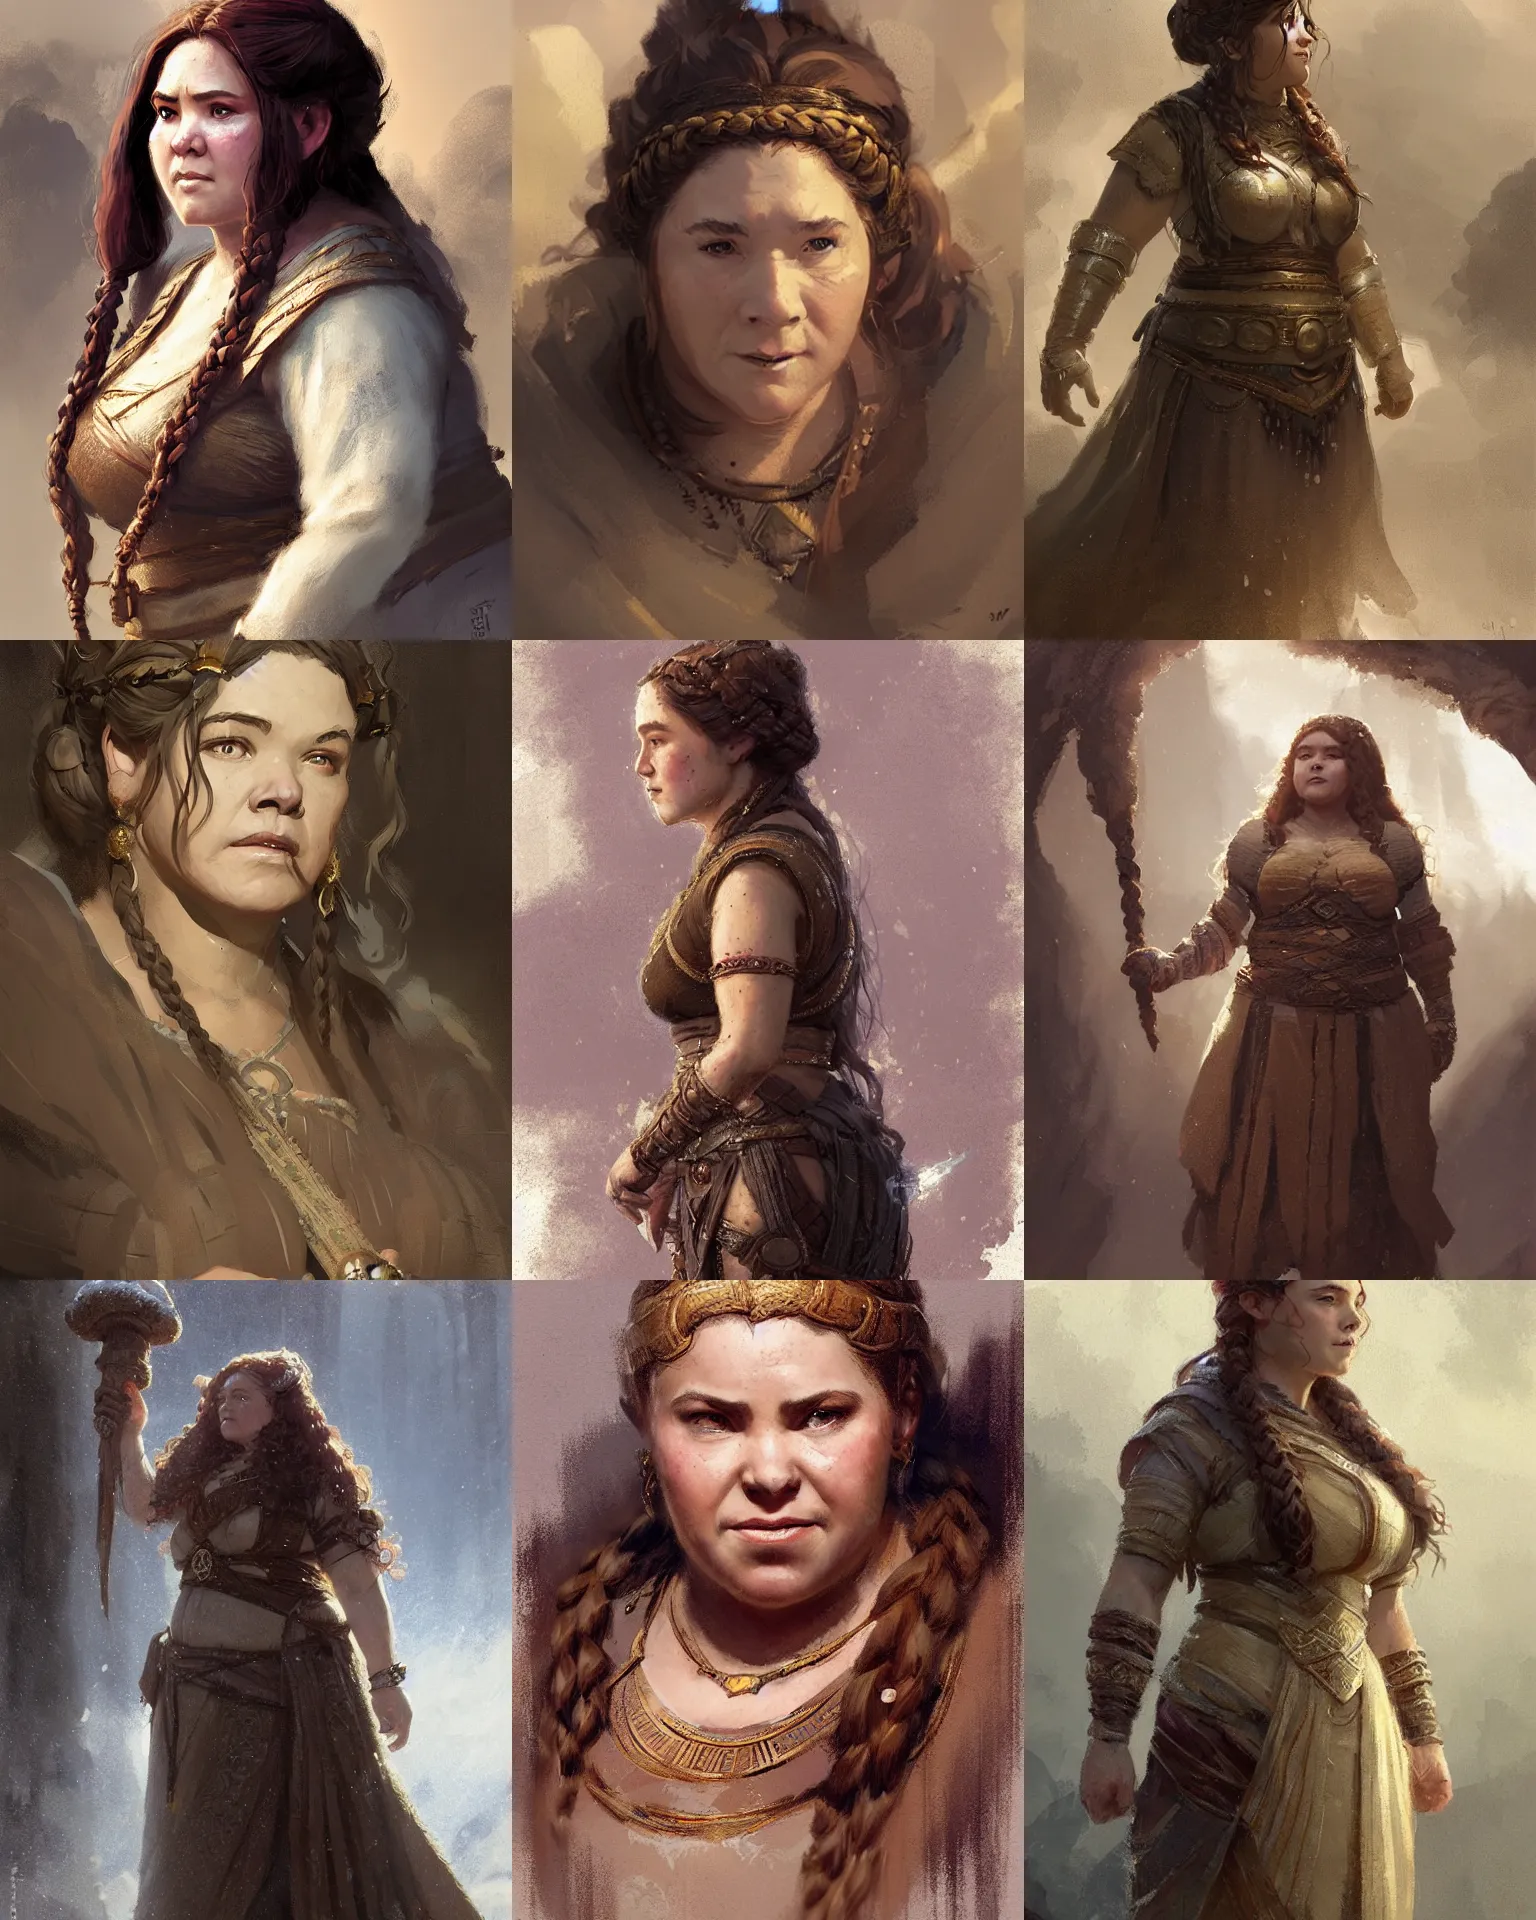 Prompt: female dwarven noblewoman, chubby short stature, braided intricate hair, by greg rutkowski